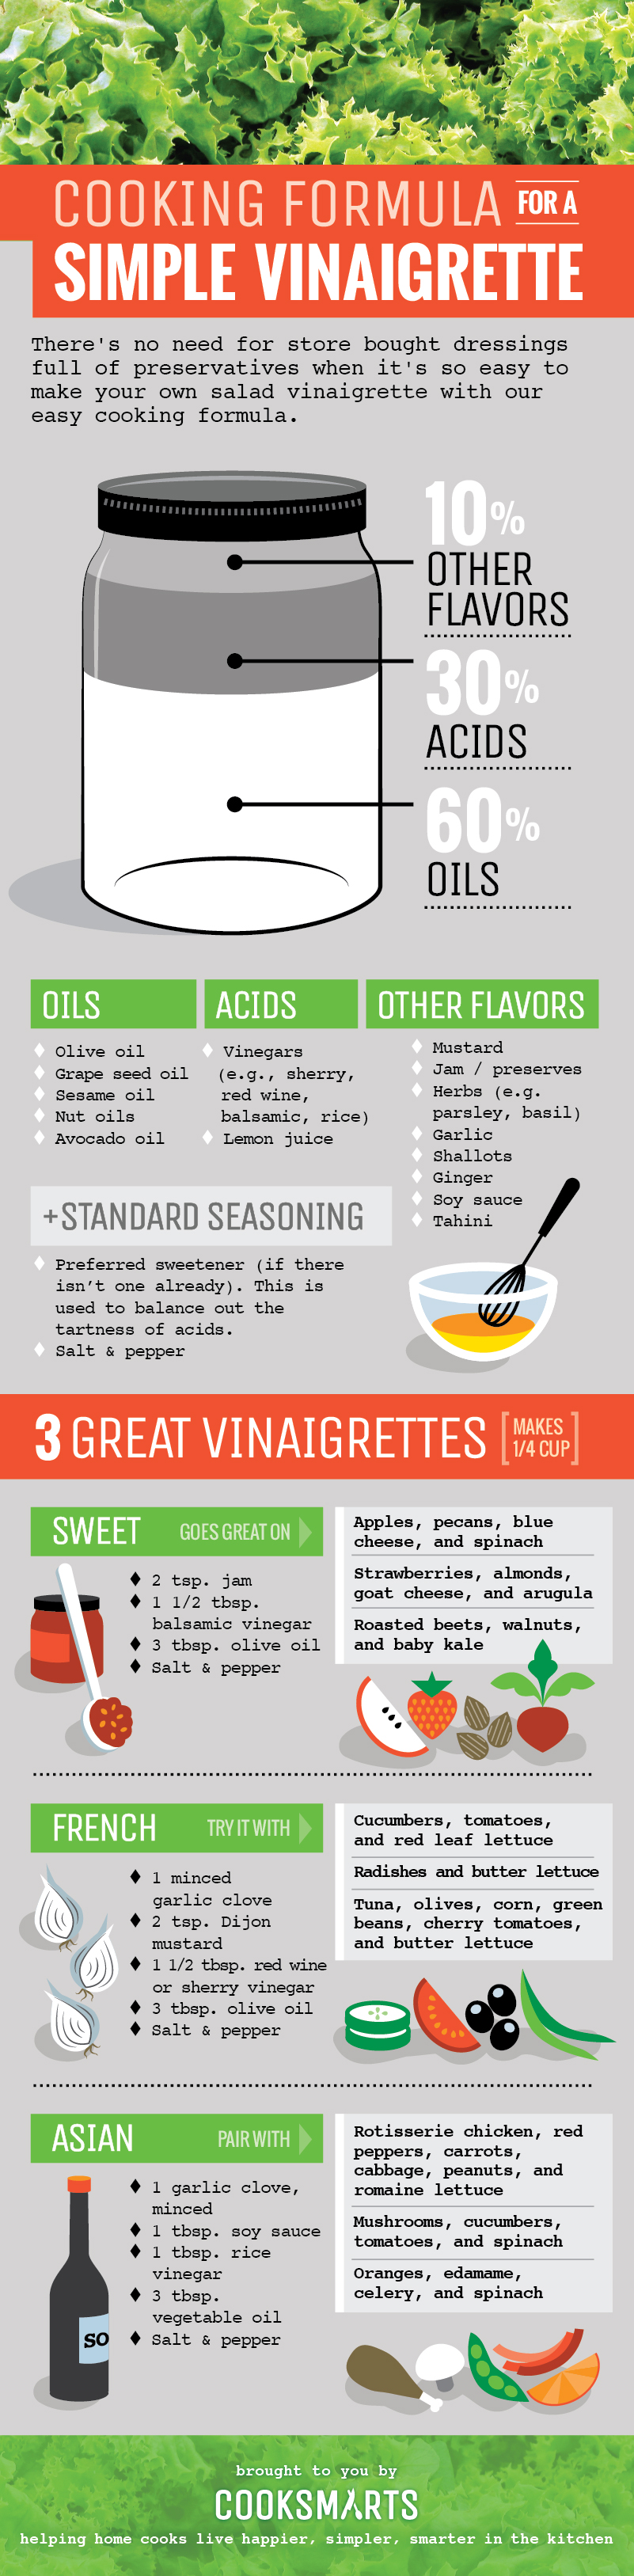 How To Make The Perfect Vinaigrette [Infographic]